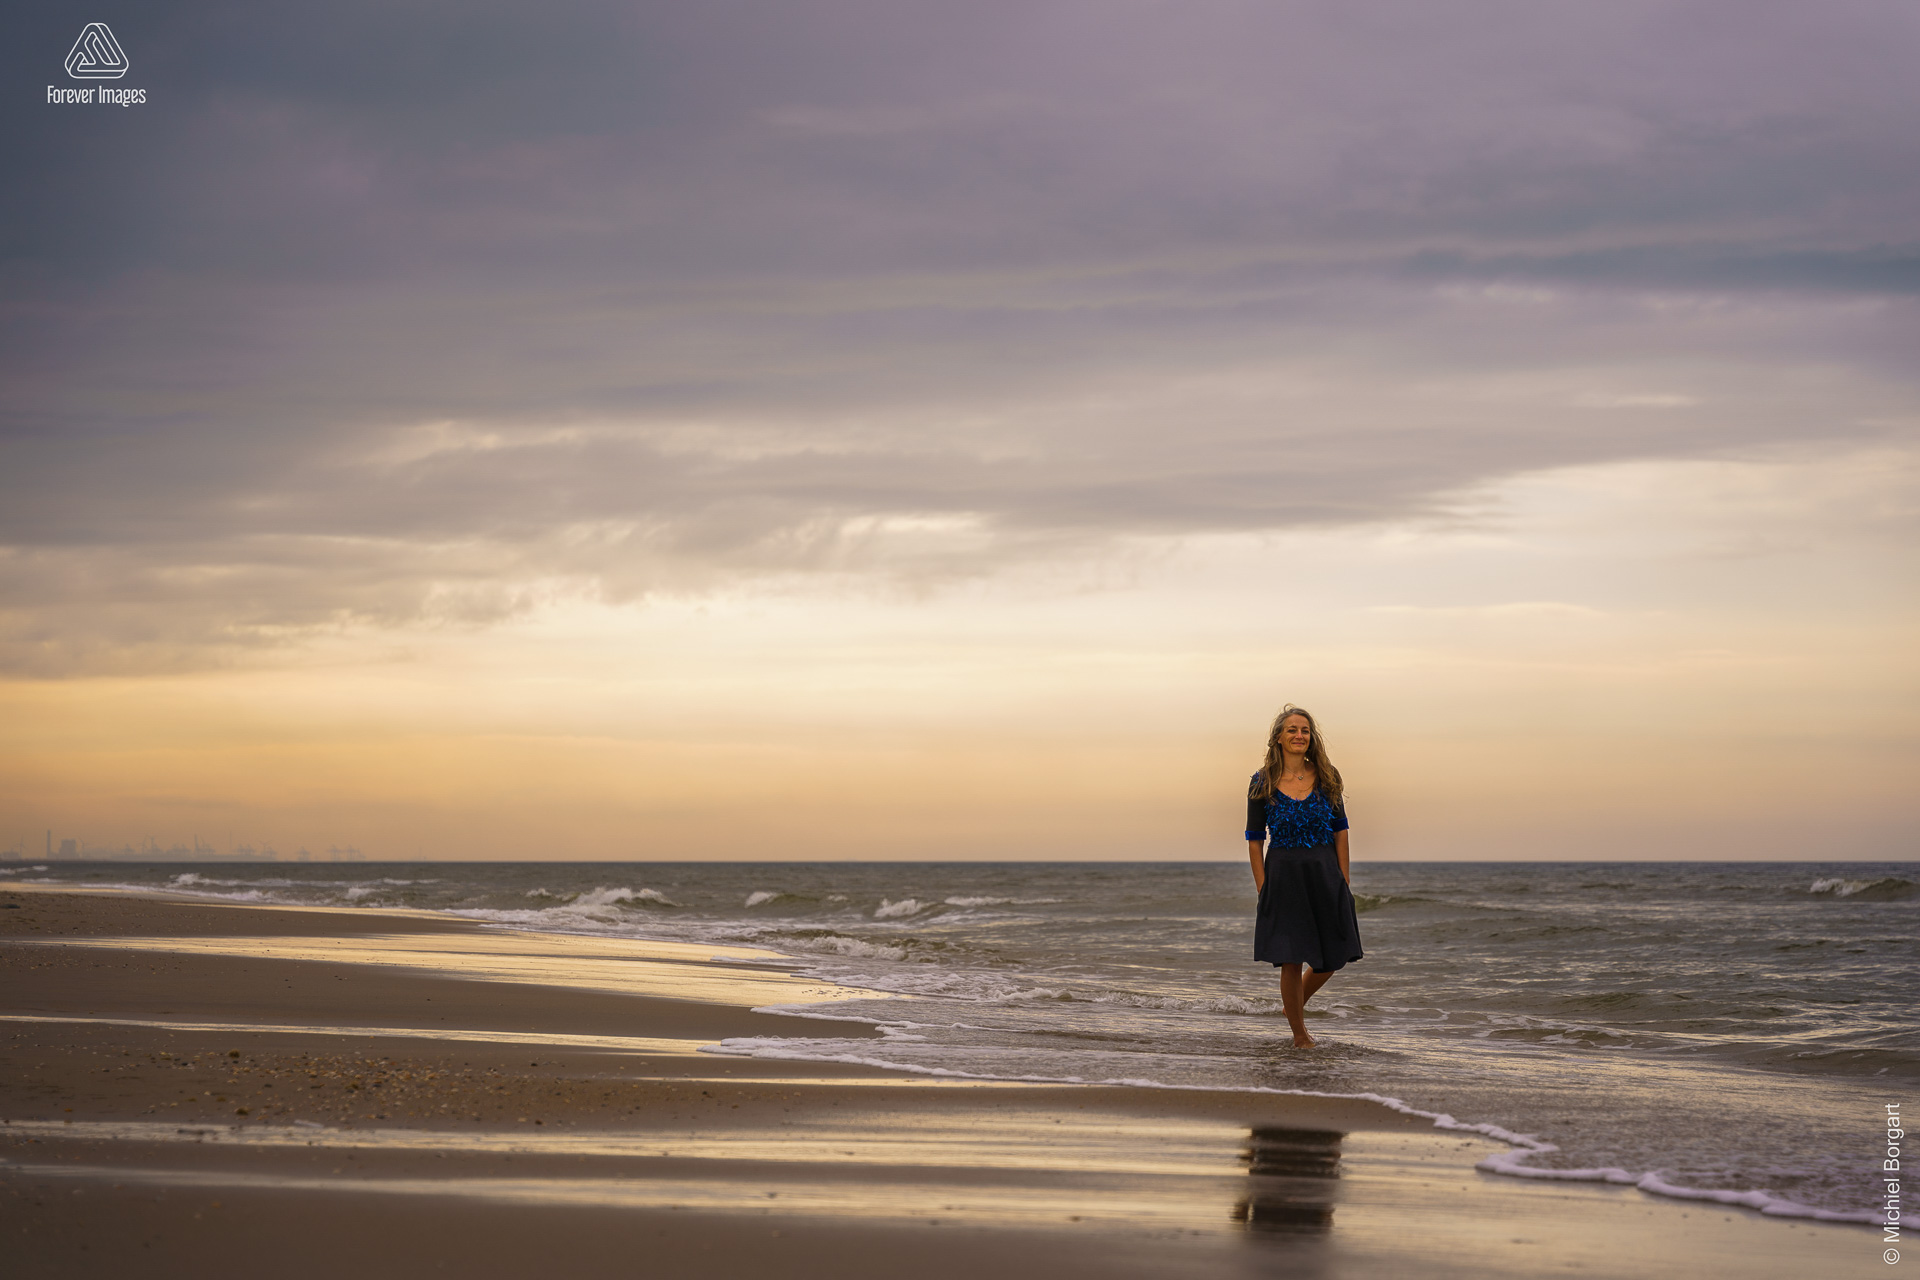 Portrait photo lady walks through the water North Sea Kijkduin | Esther Echt Eigenwijs | Portrait Photographer Michiel Borgart - Forever Images.